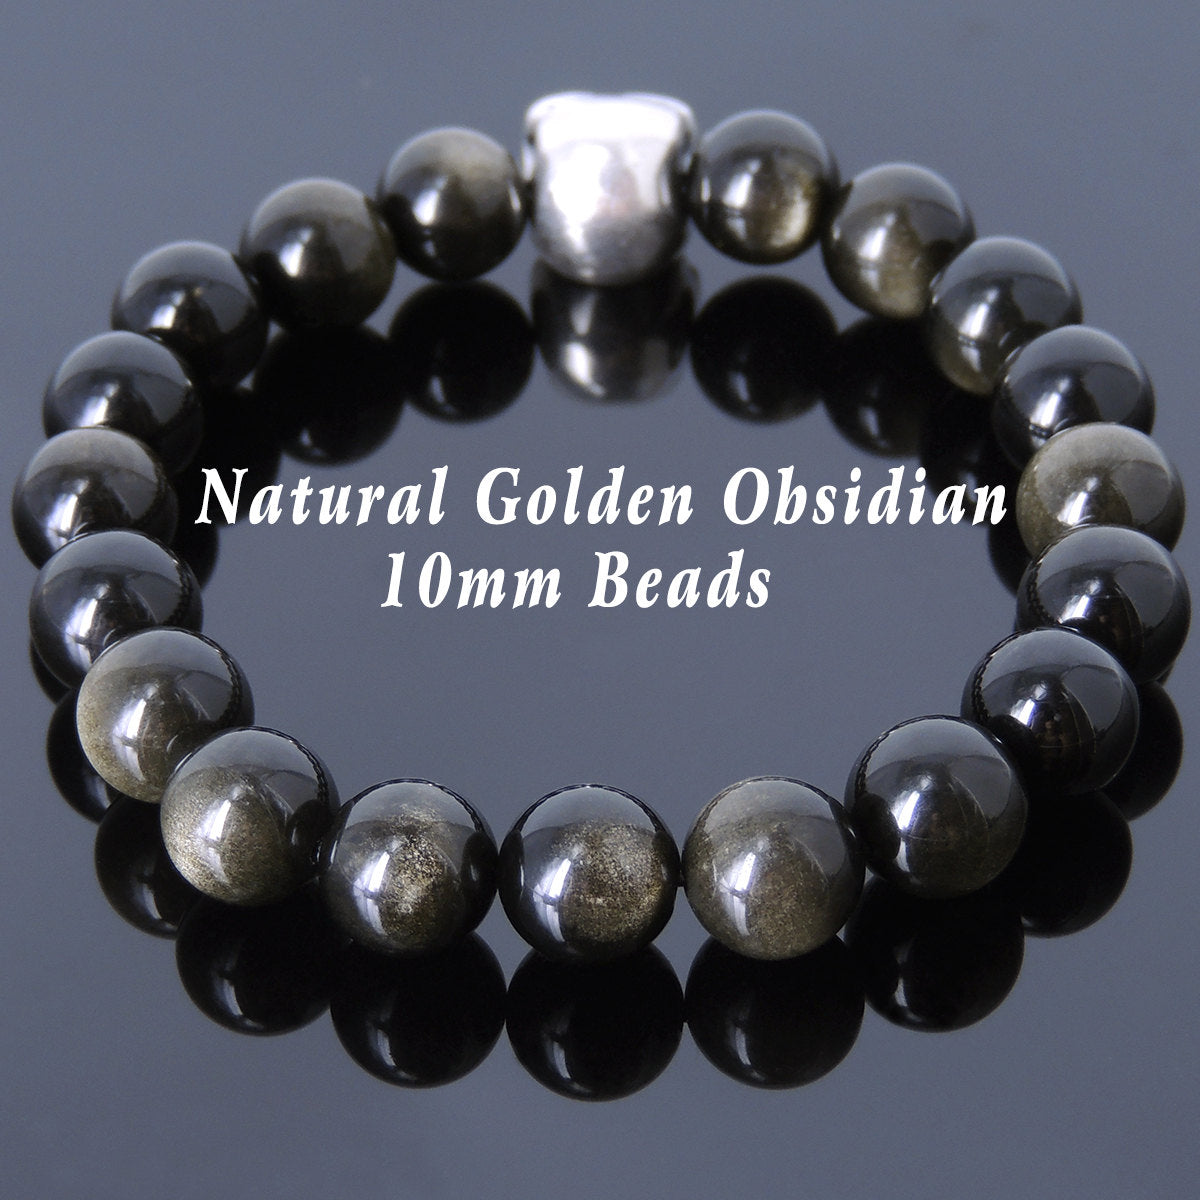 10mm Golden Obsidian Healing Gemstone Bracelet with S925 Sterling Silver Skull Protection Charm - Handmade by Gem & Silver BR604